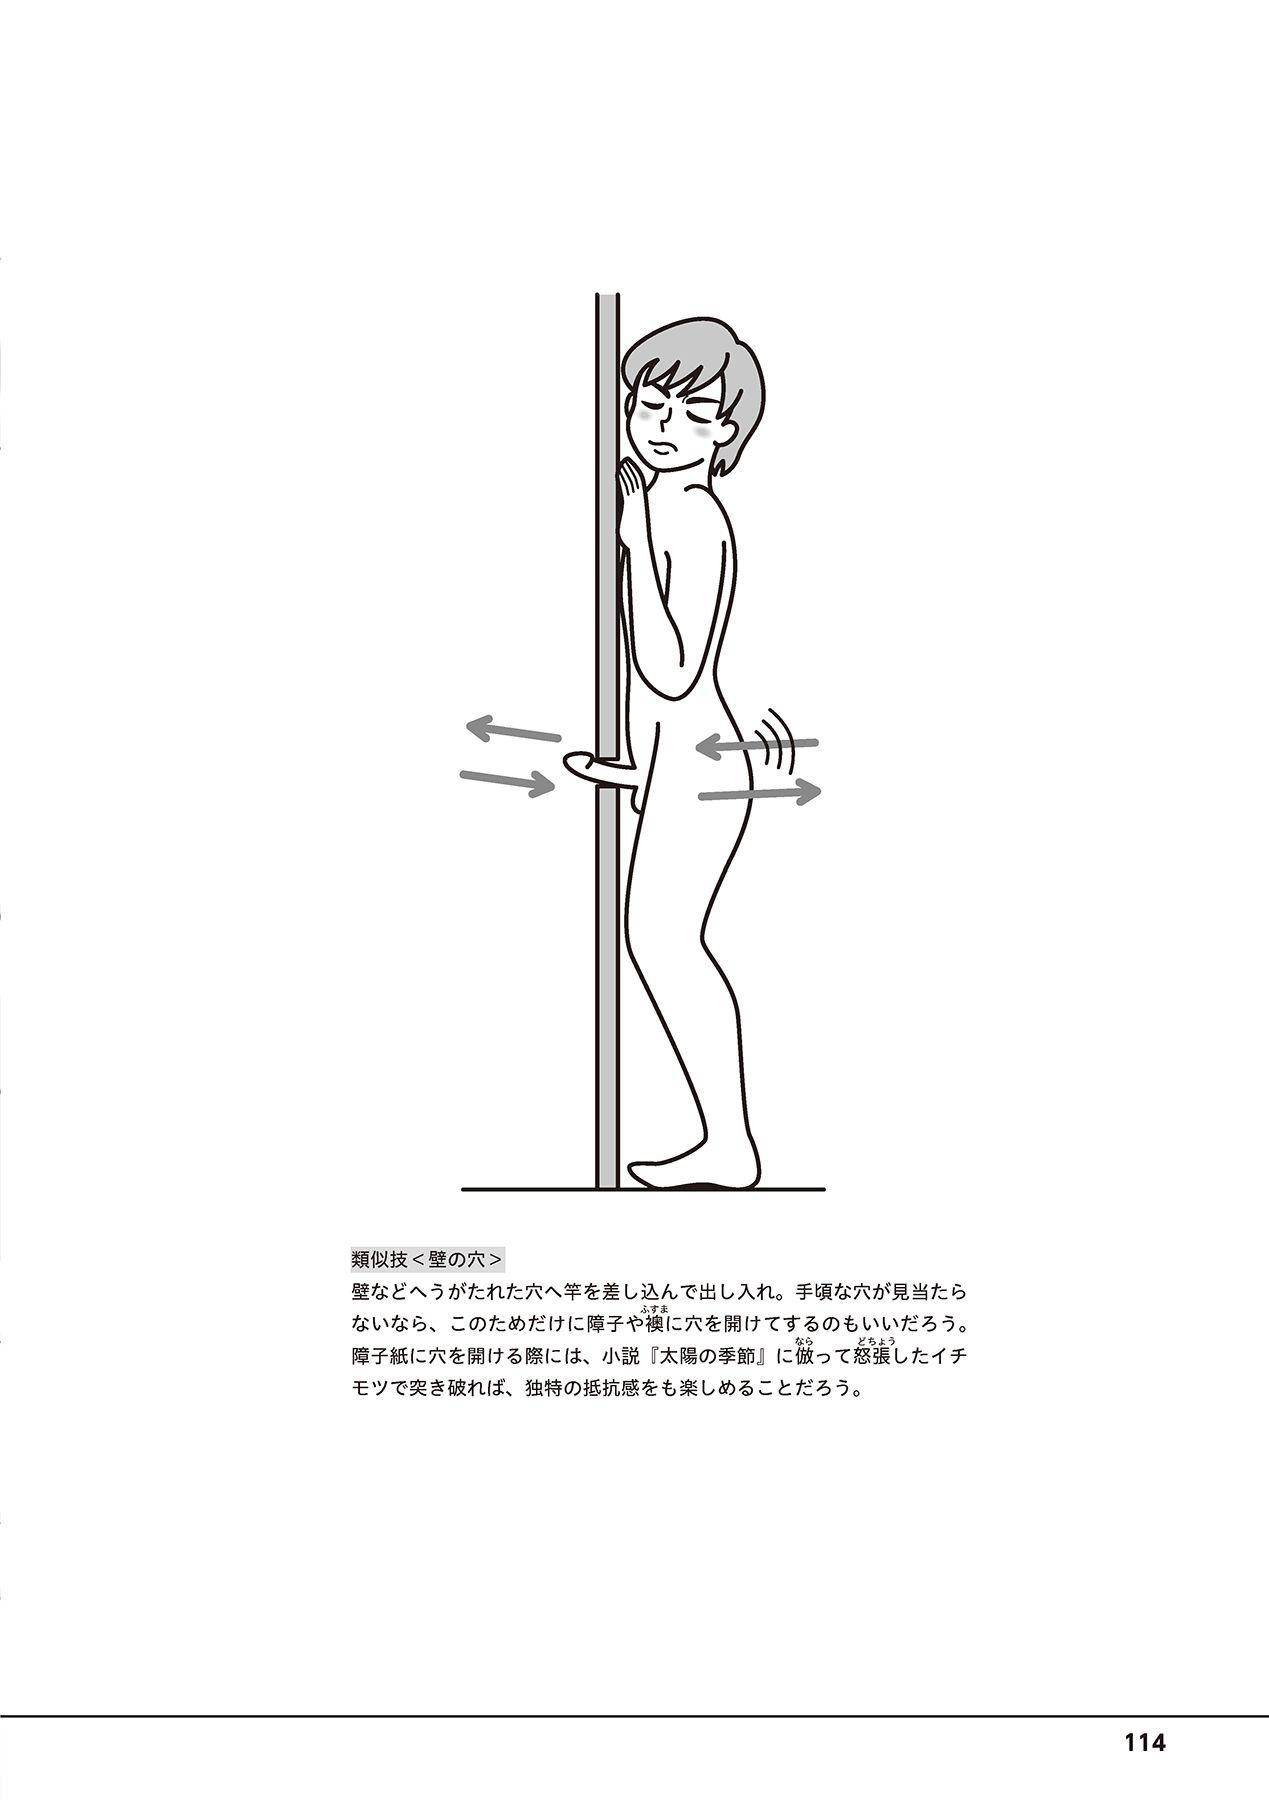 Otoko no Jii Onanie Kanzen Manual Illustration Han...... Onanie Play 115